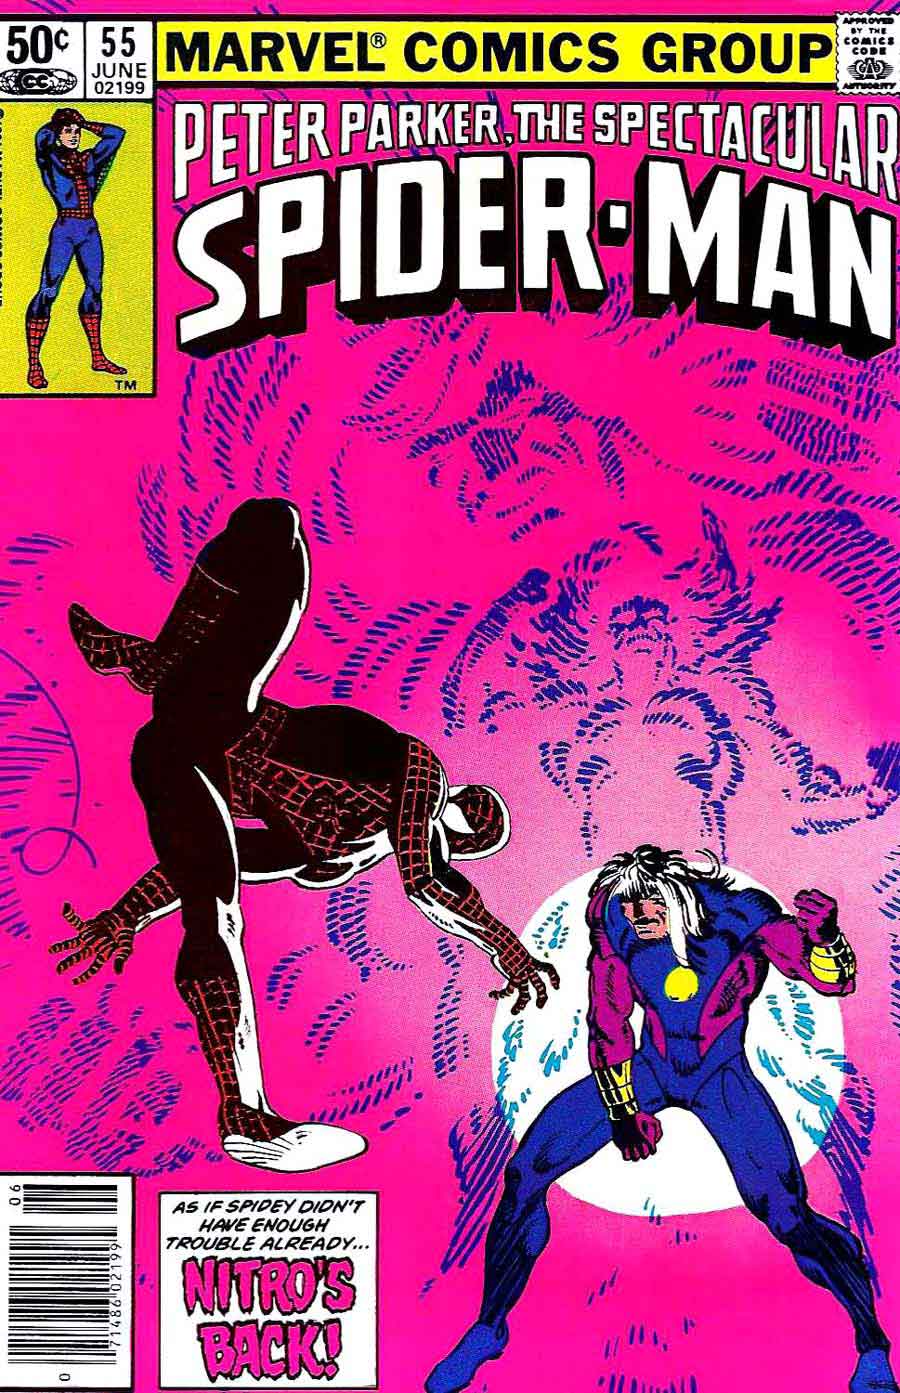 Spectacular Spider-man v2 #55 marvel 1980s comic book cover art by Frank Miller